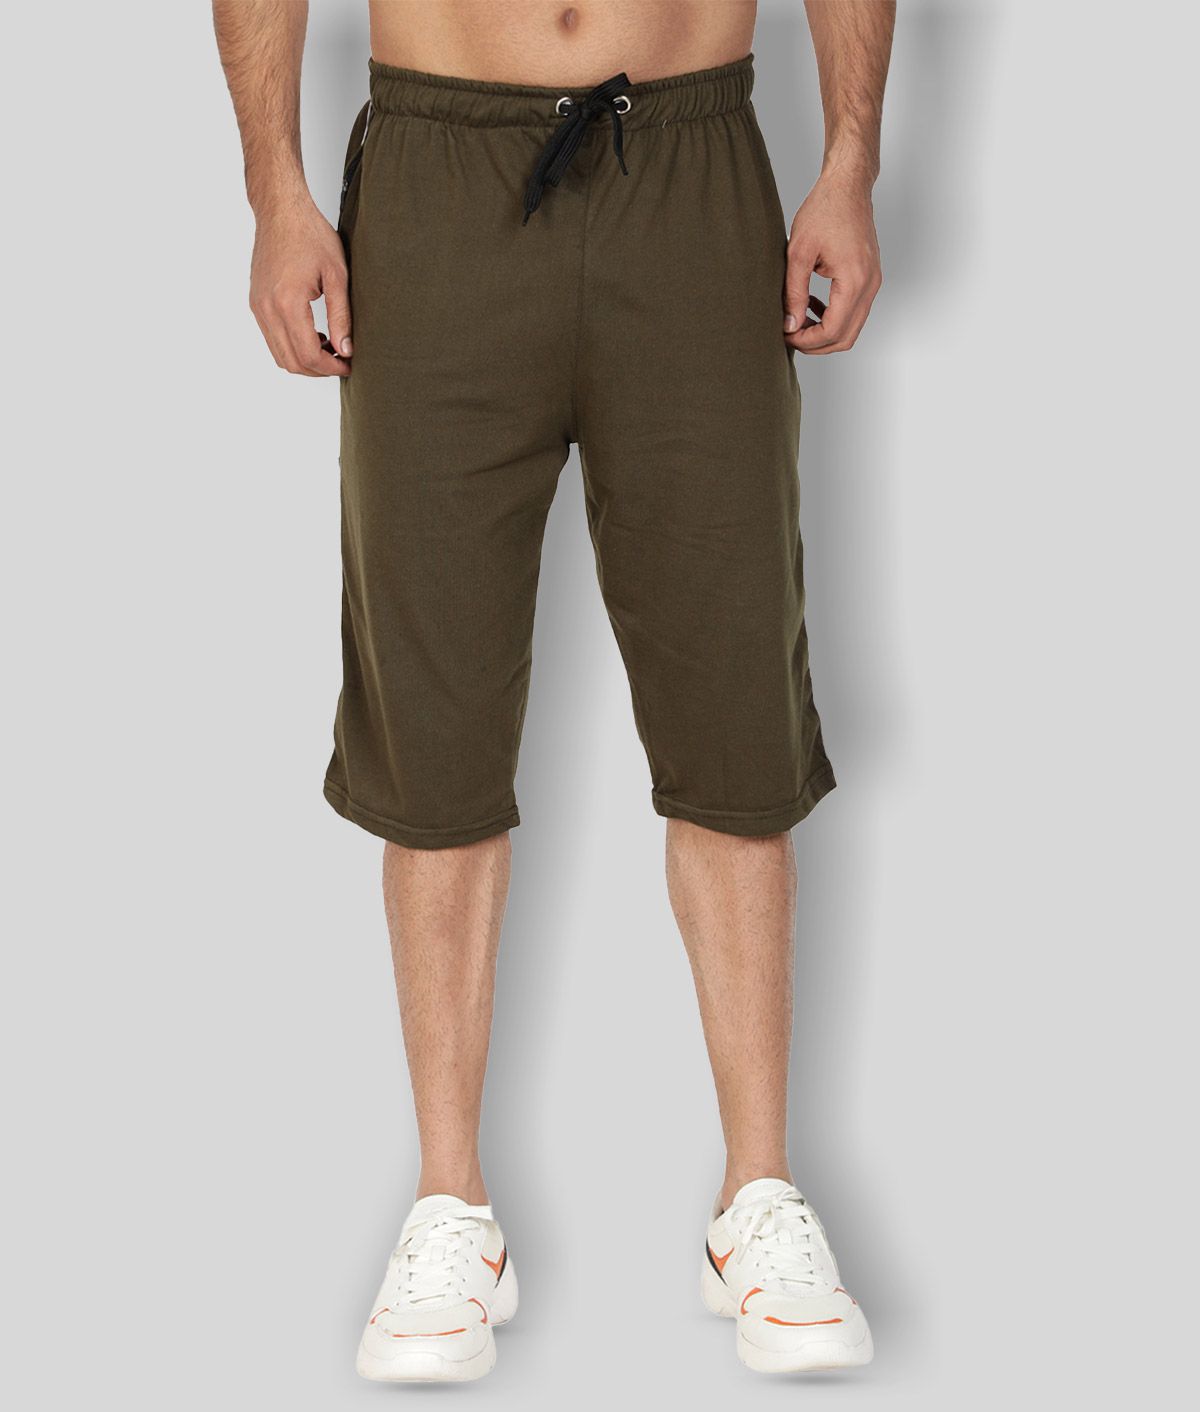     			Uzarus - Green Cotton Blend Men's Shorts ( Pack of 1 )